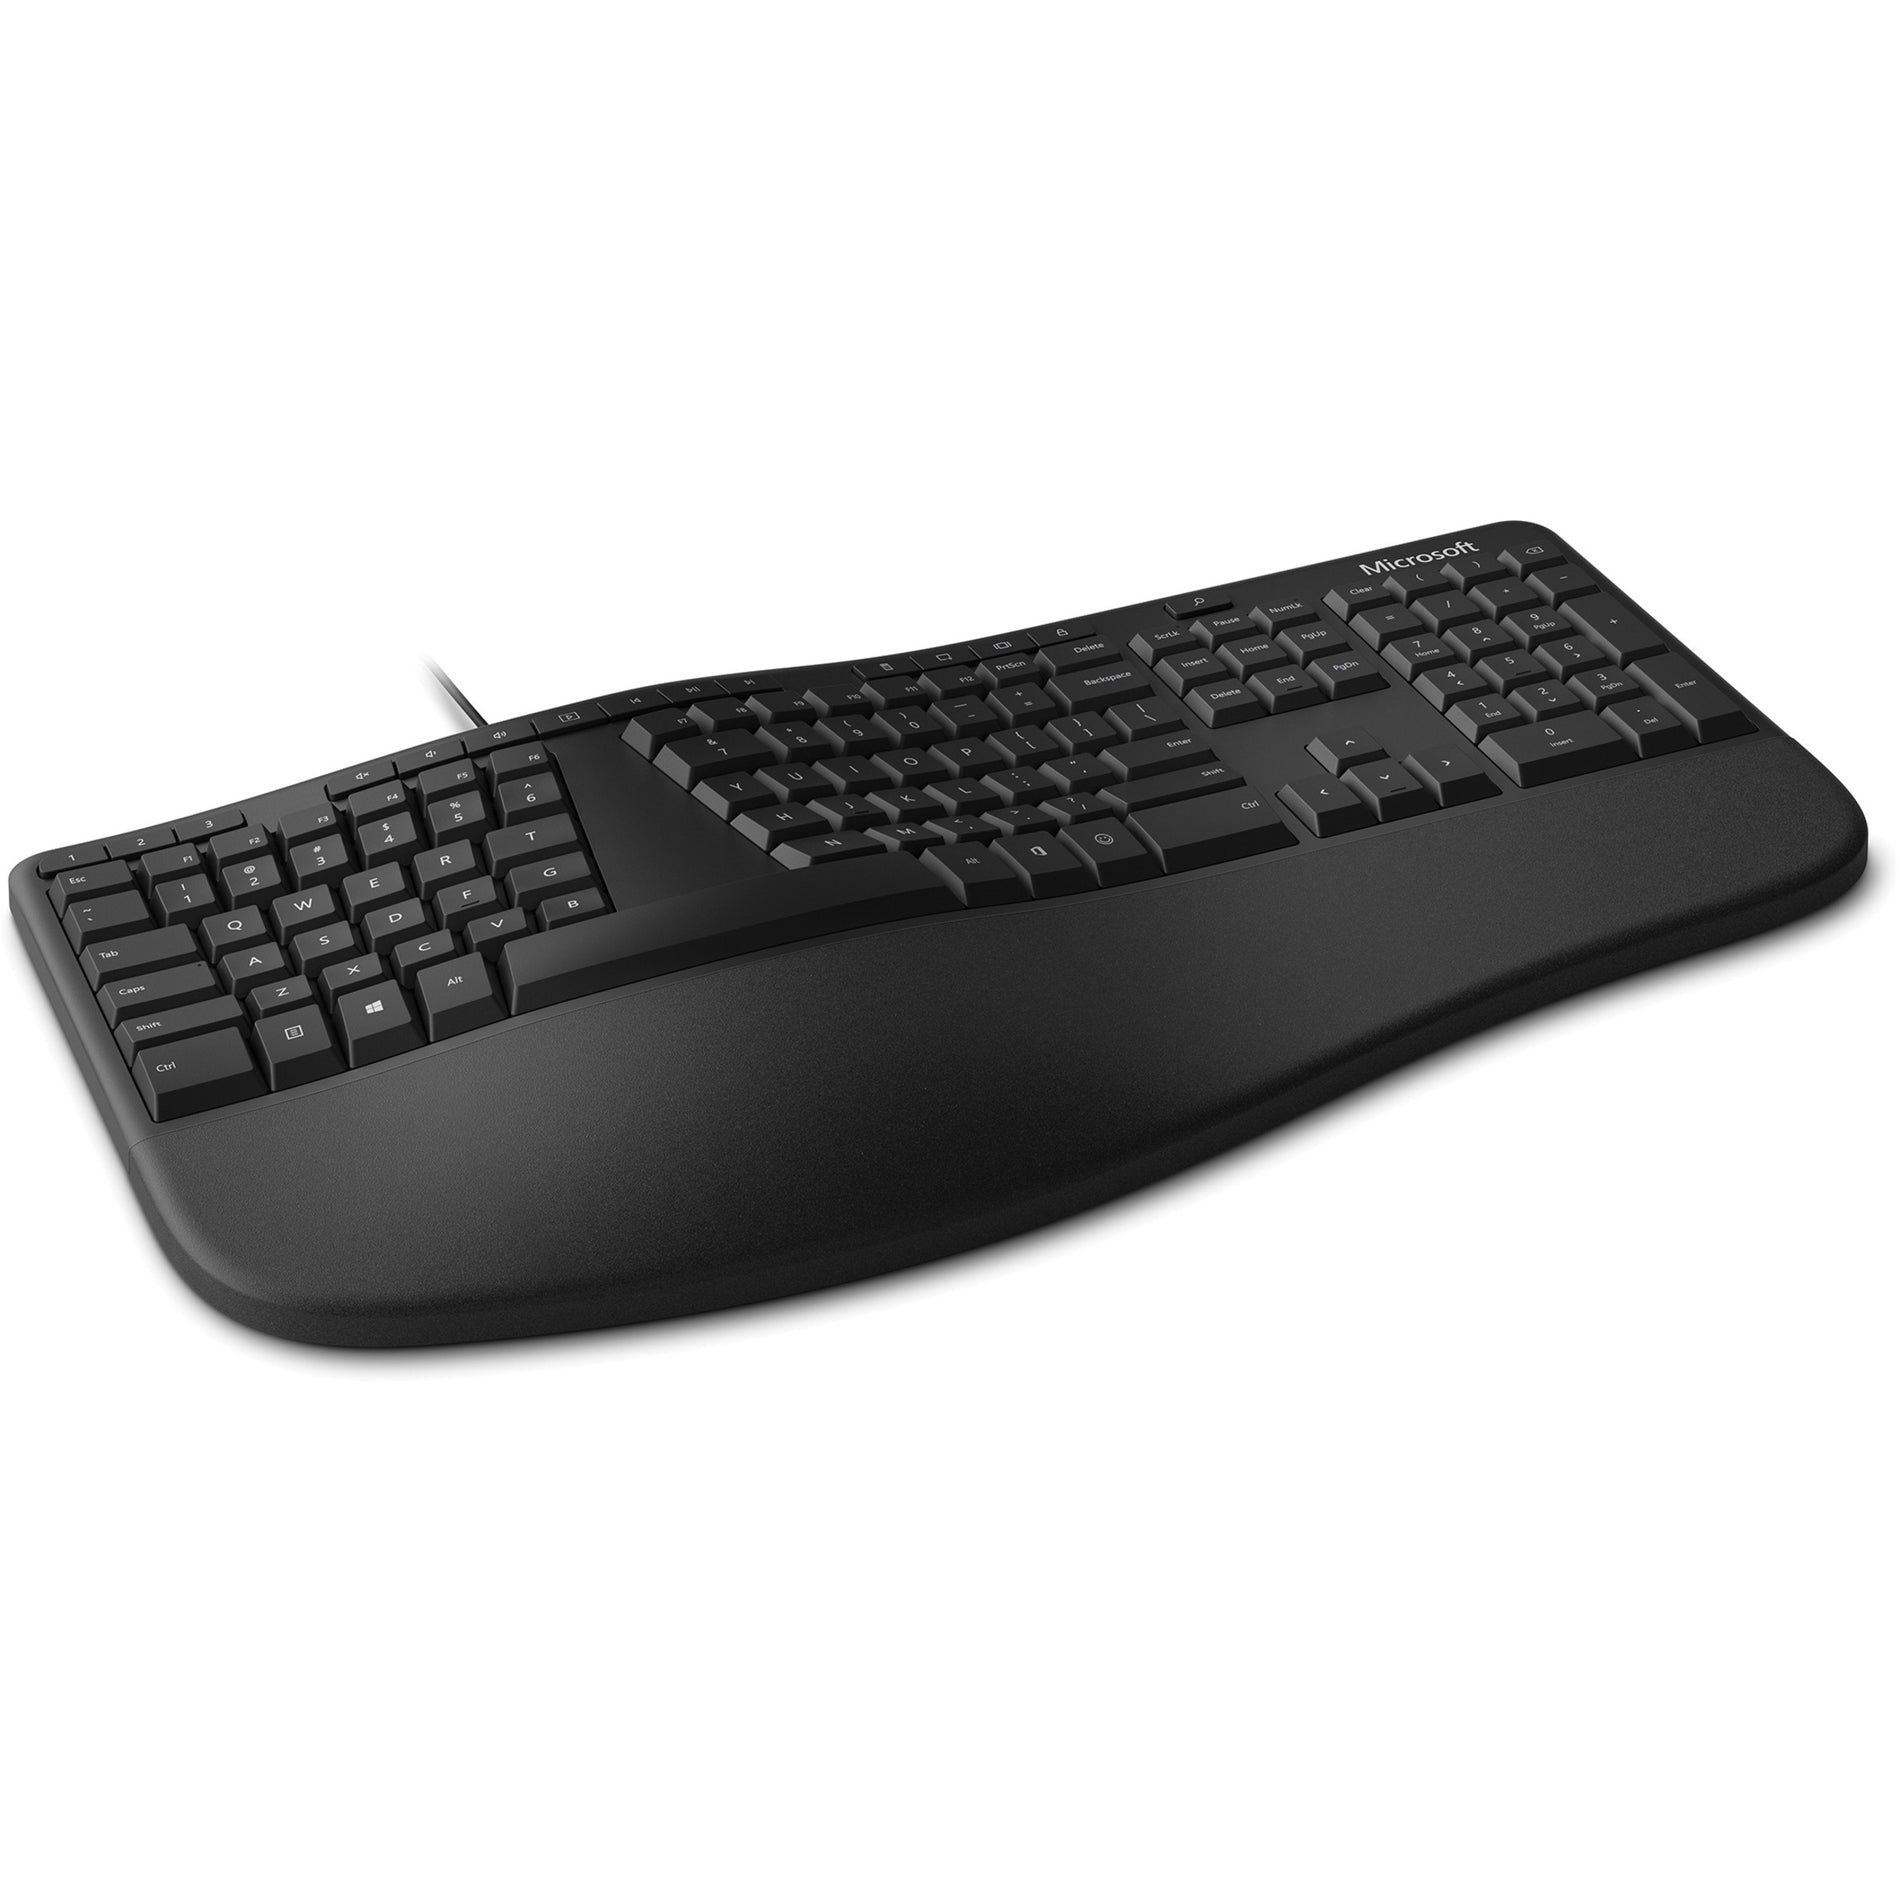 Microsoft LXN-00001 Keyboard, English (US/Canada), USB Cable Connectivity